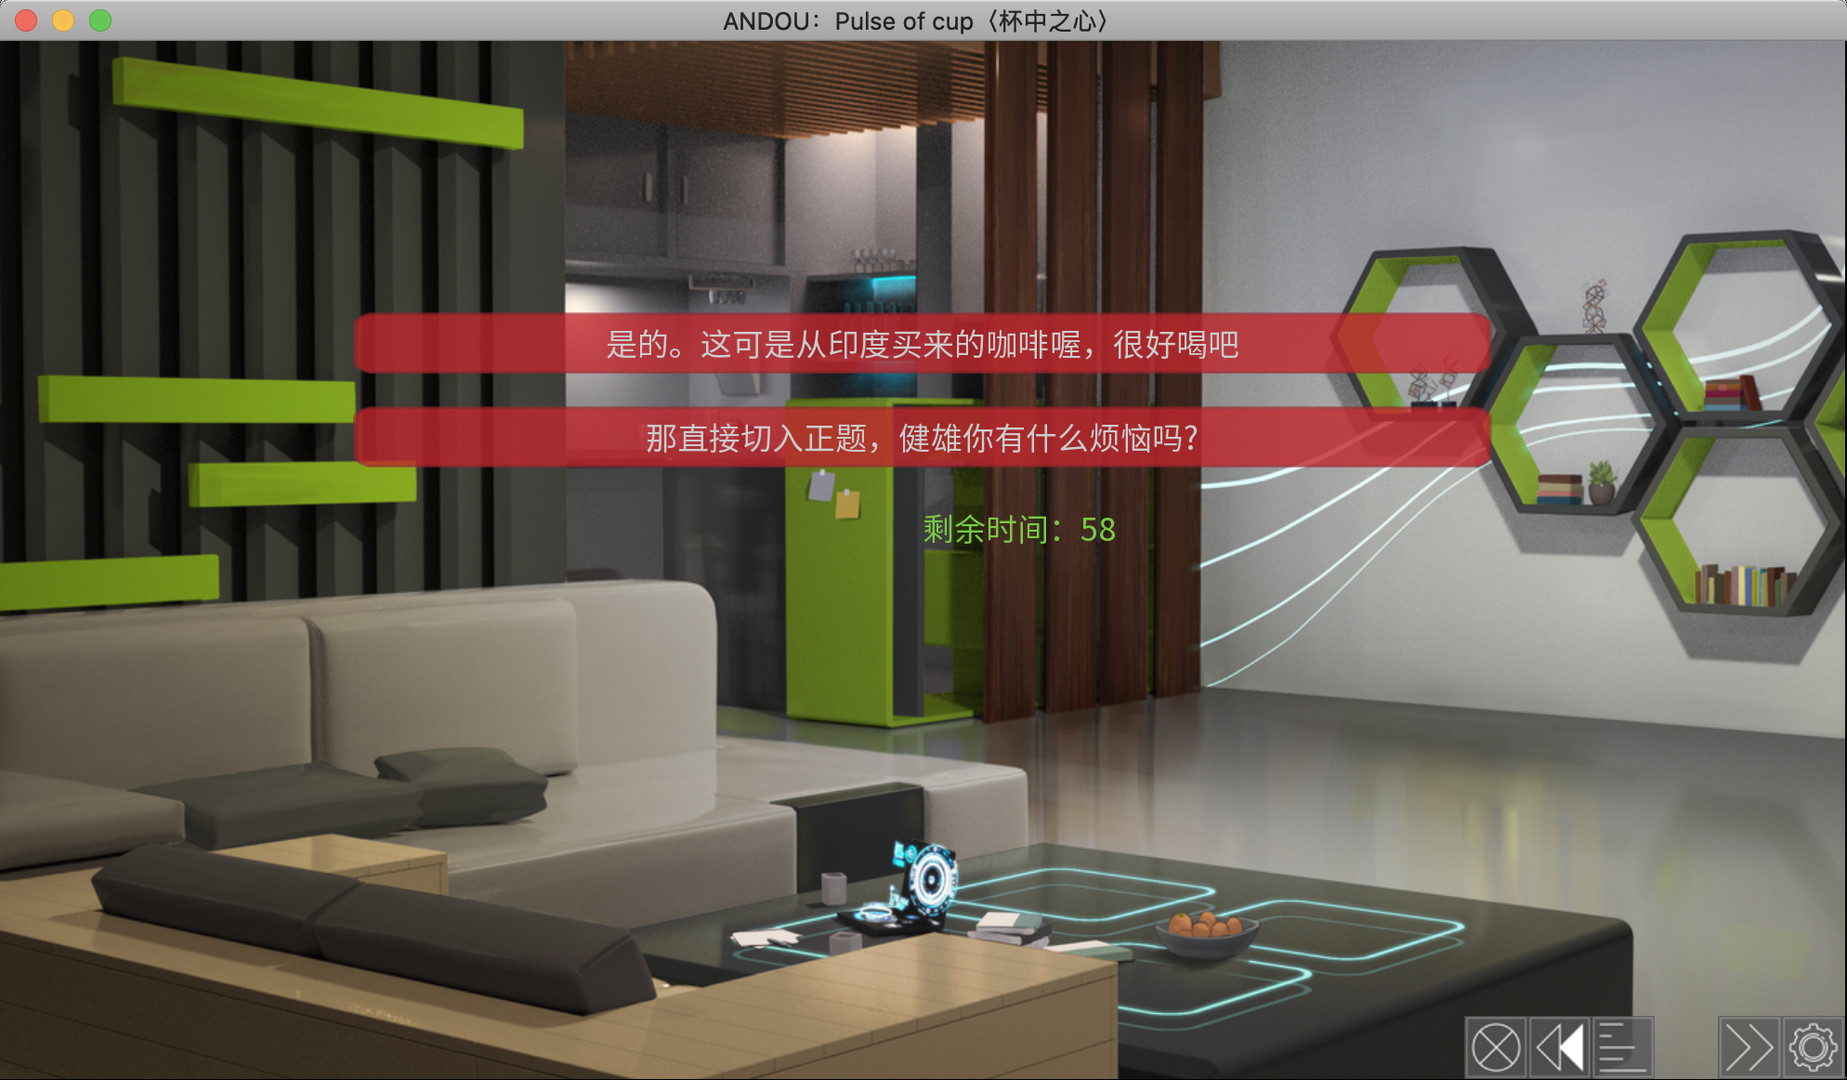 screenshot of 安堂的心理咨询室：杯中之心〈ANDOU：Pulse of cup〉 9